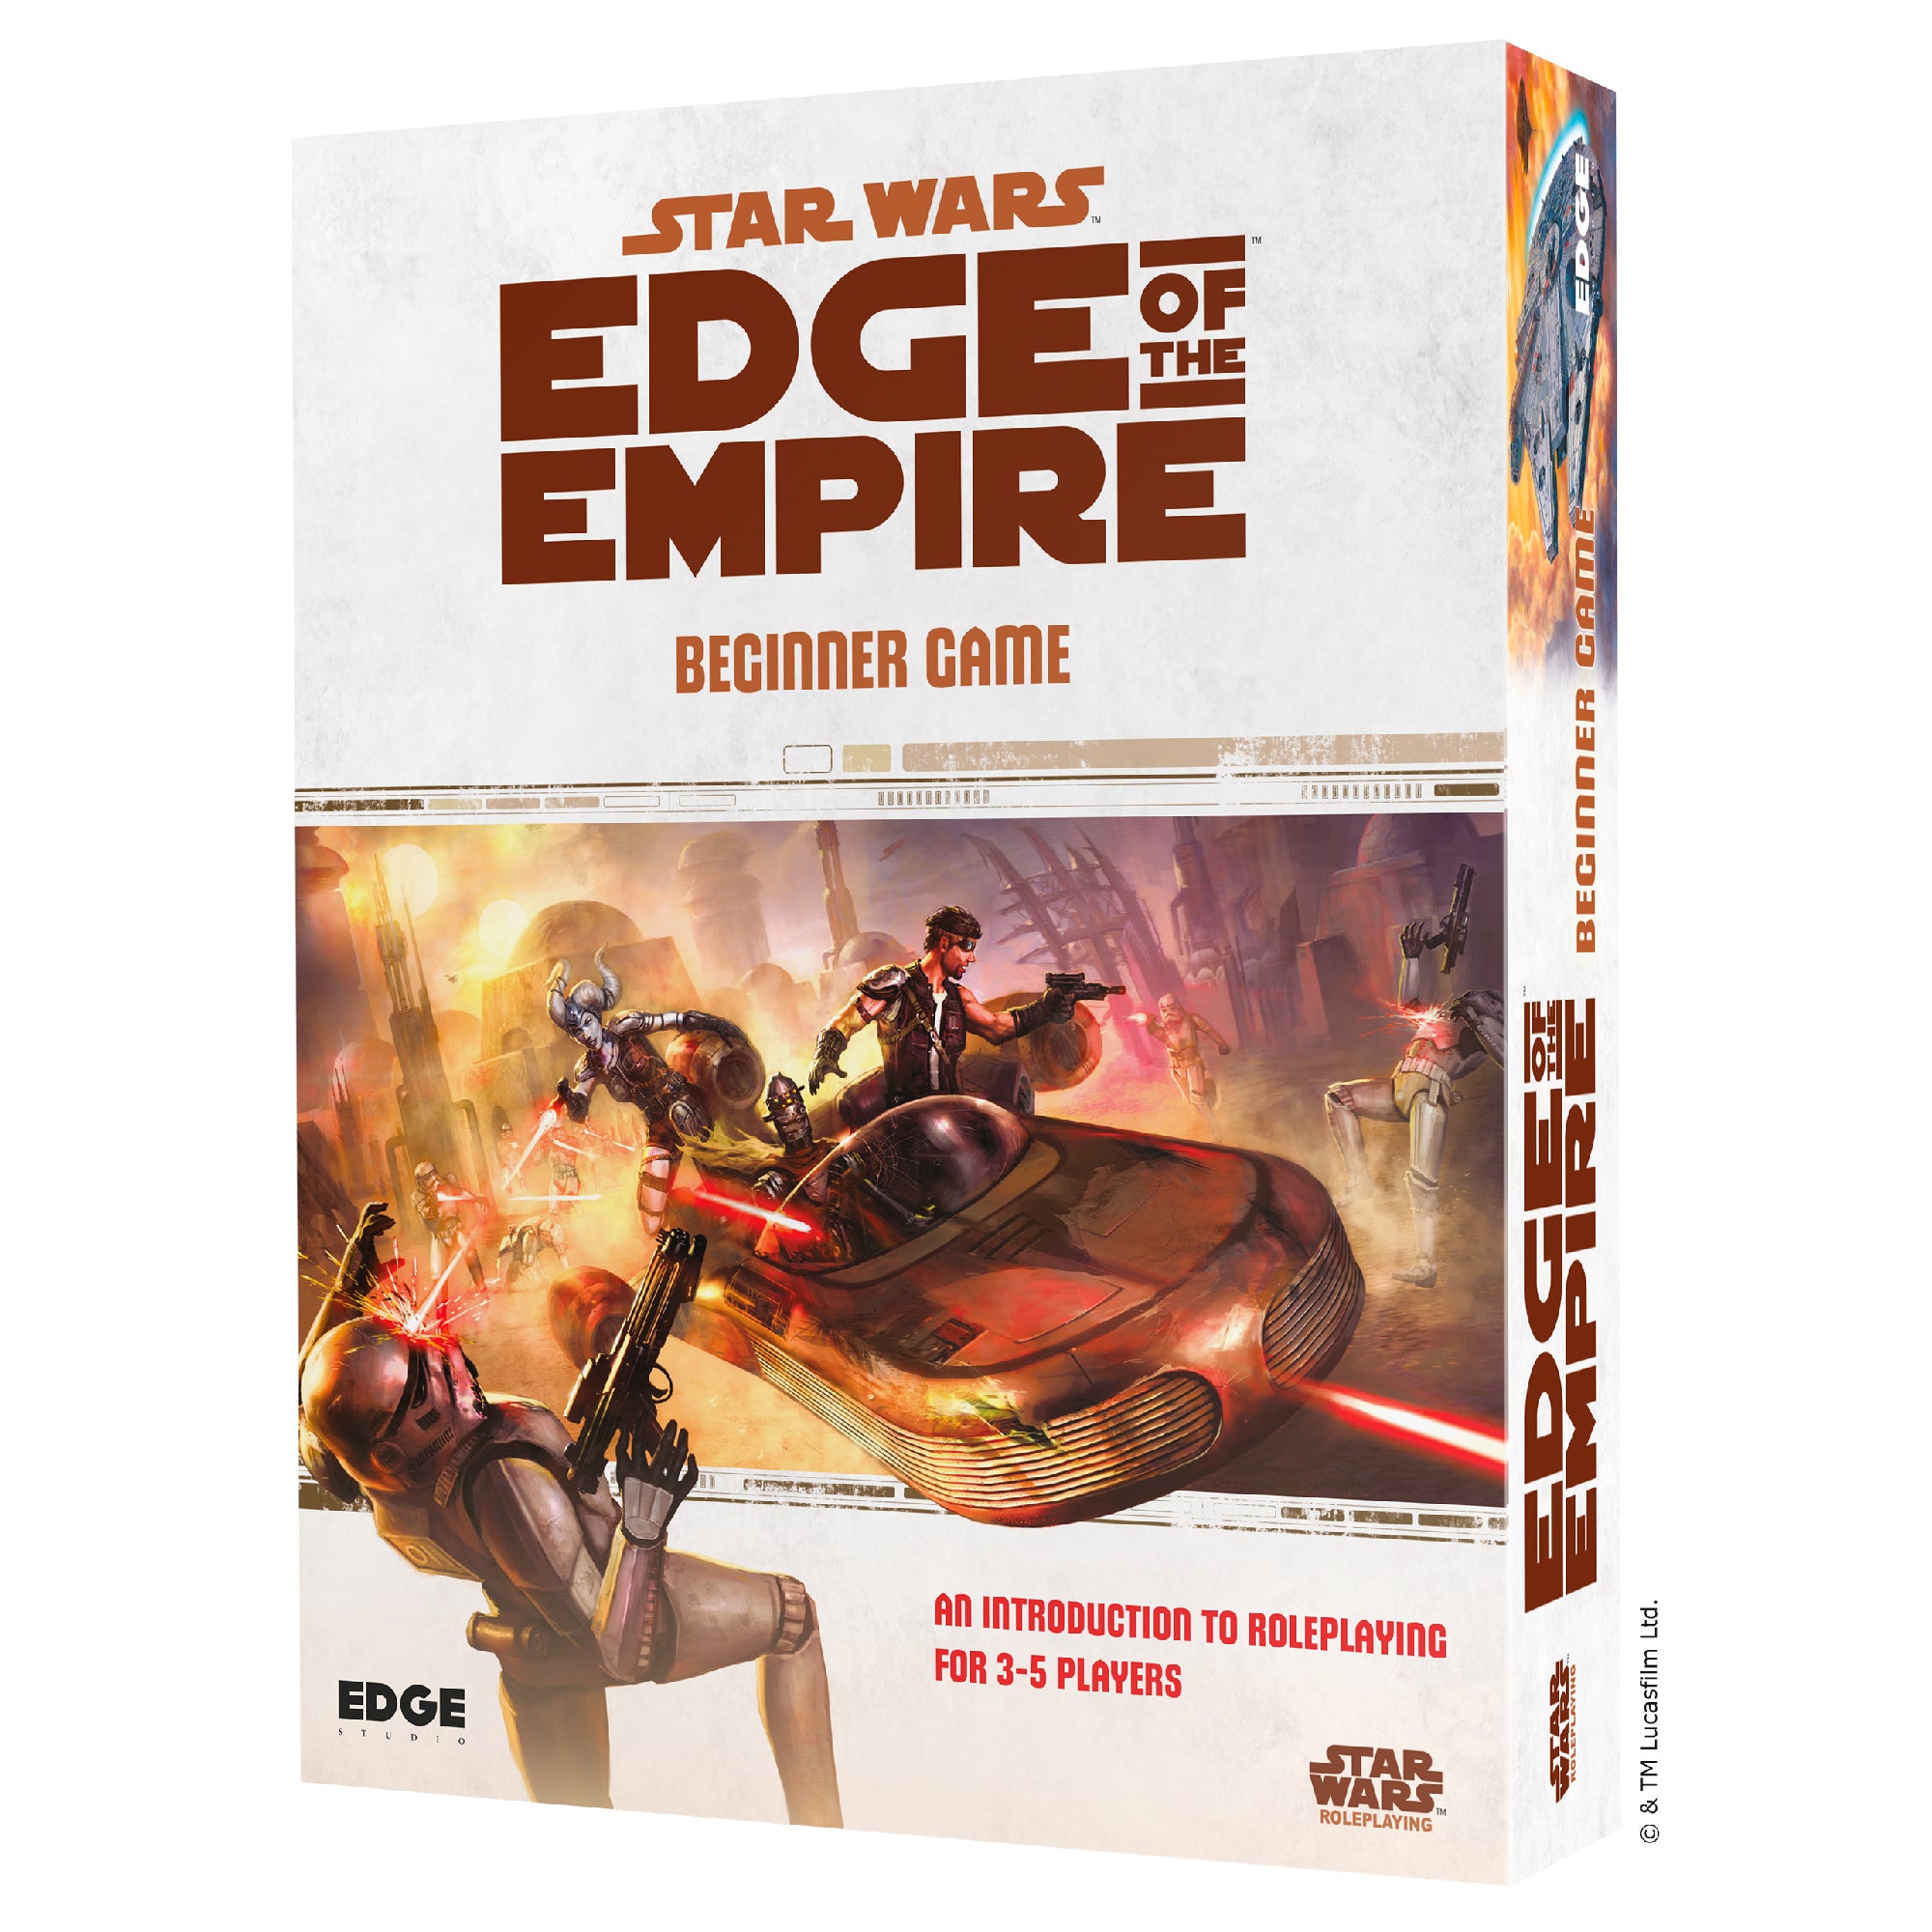 New Era Dawns for Star Wars Tabletop Gaming as Edge Studio